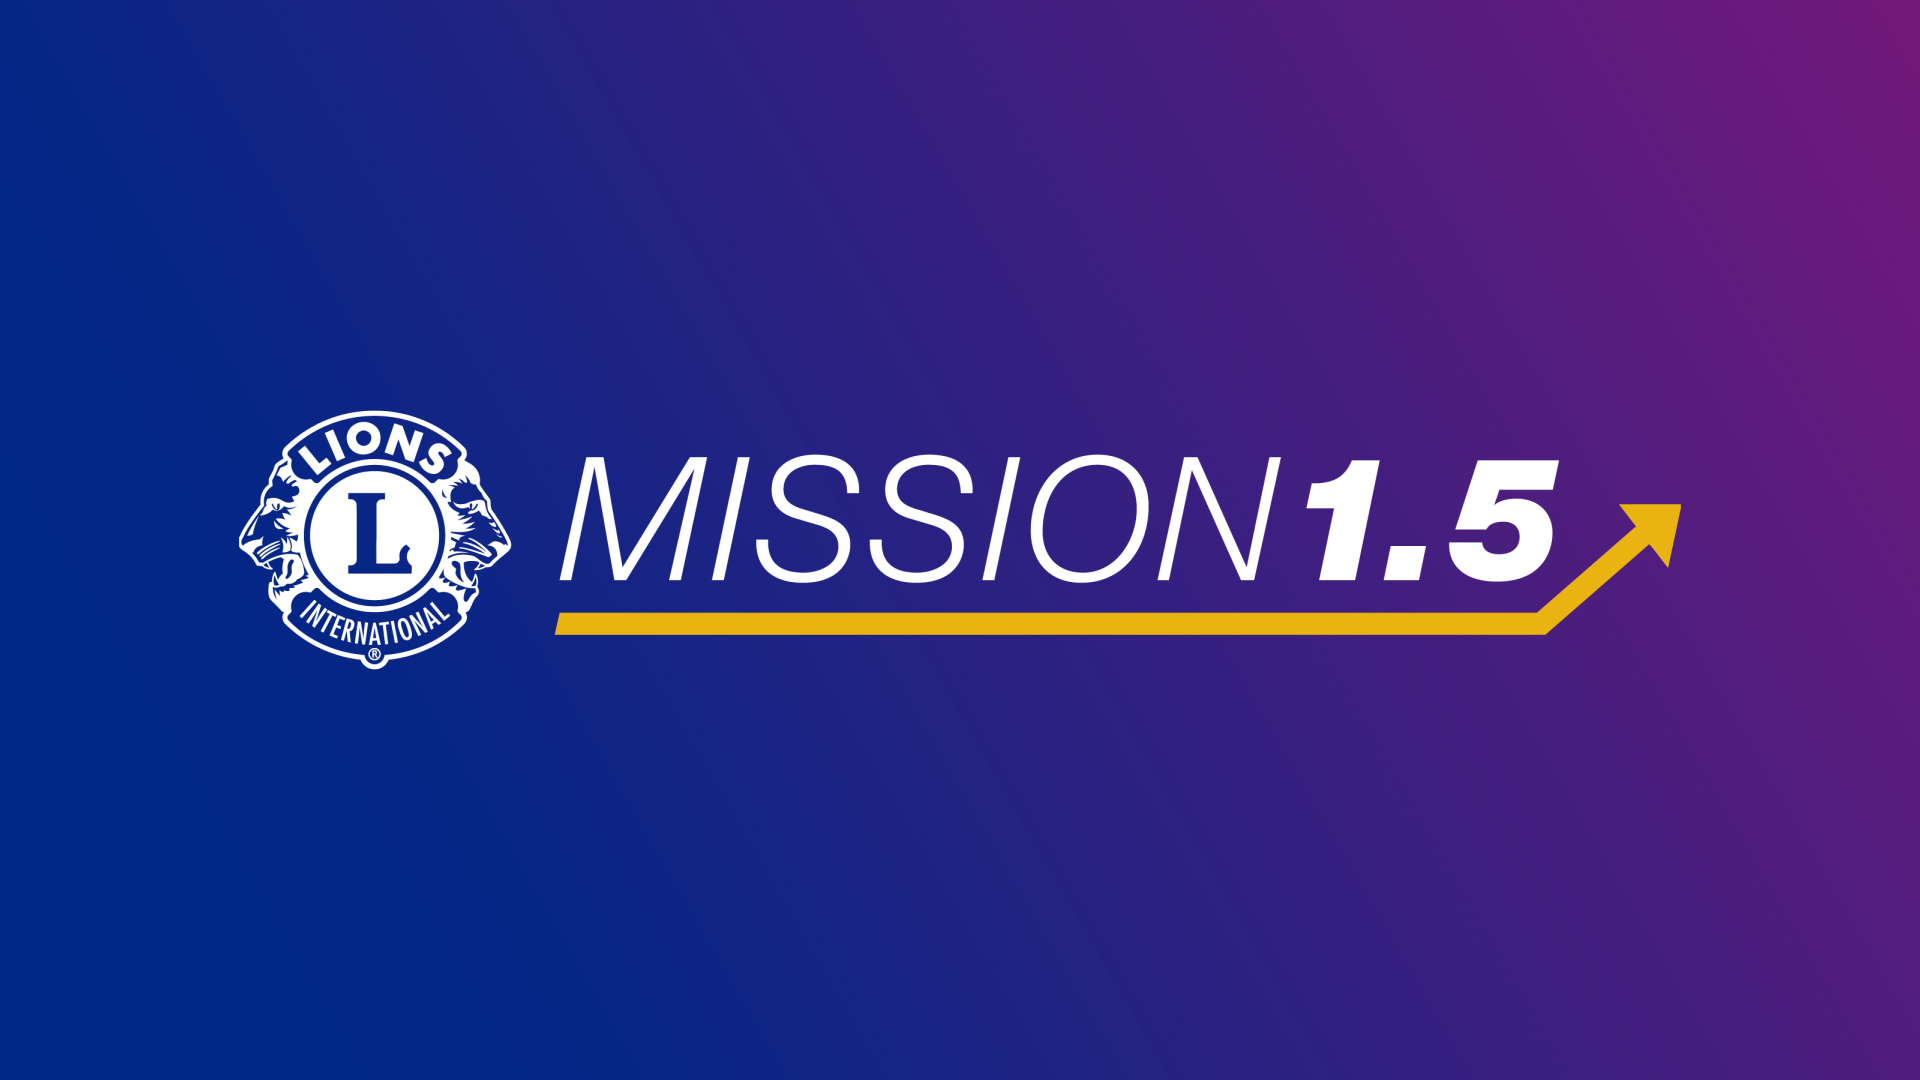 MISSION 1.5 （150萬的使命）的標誌